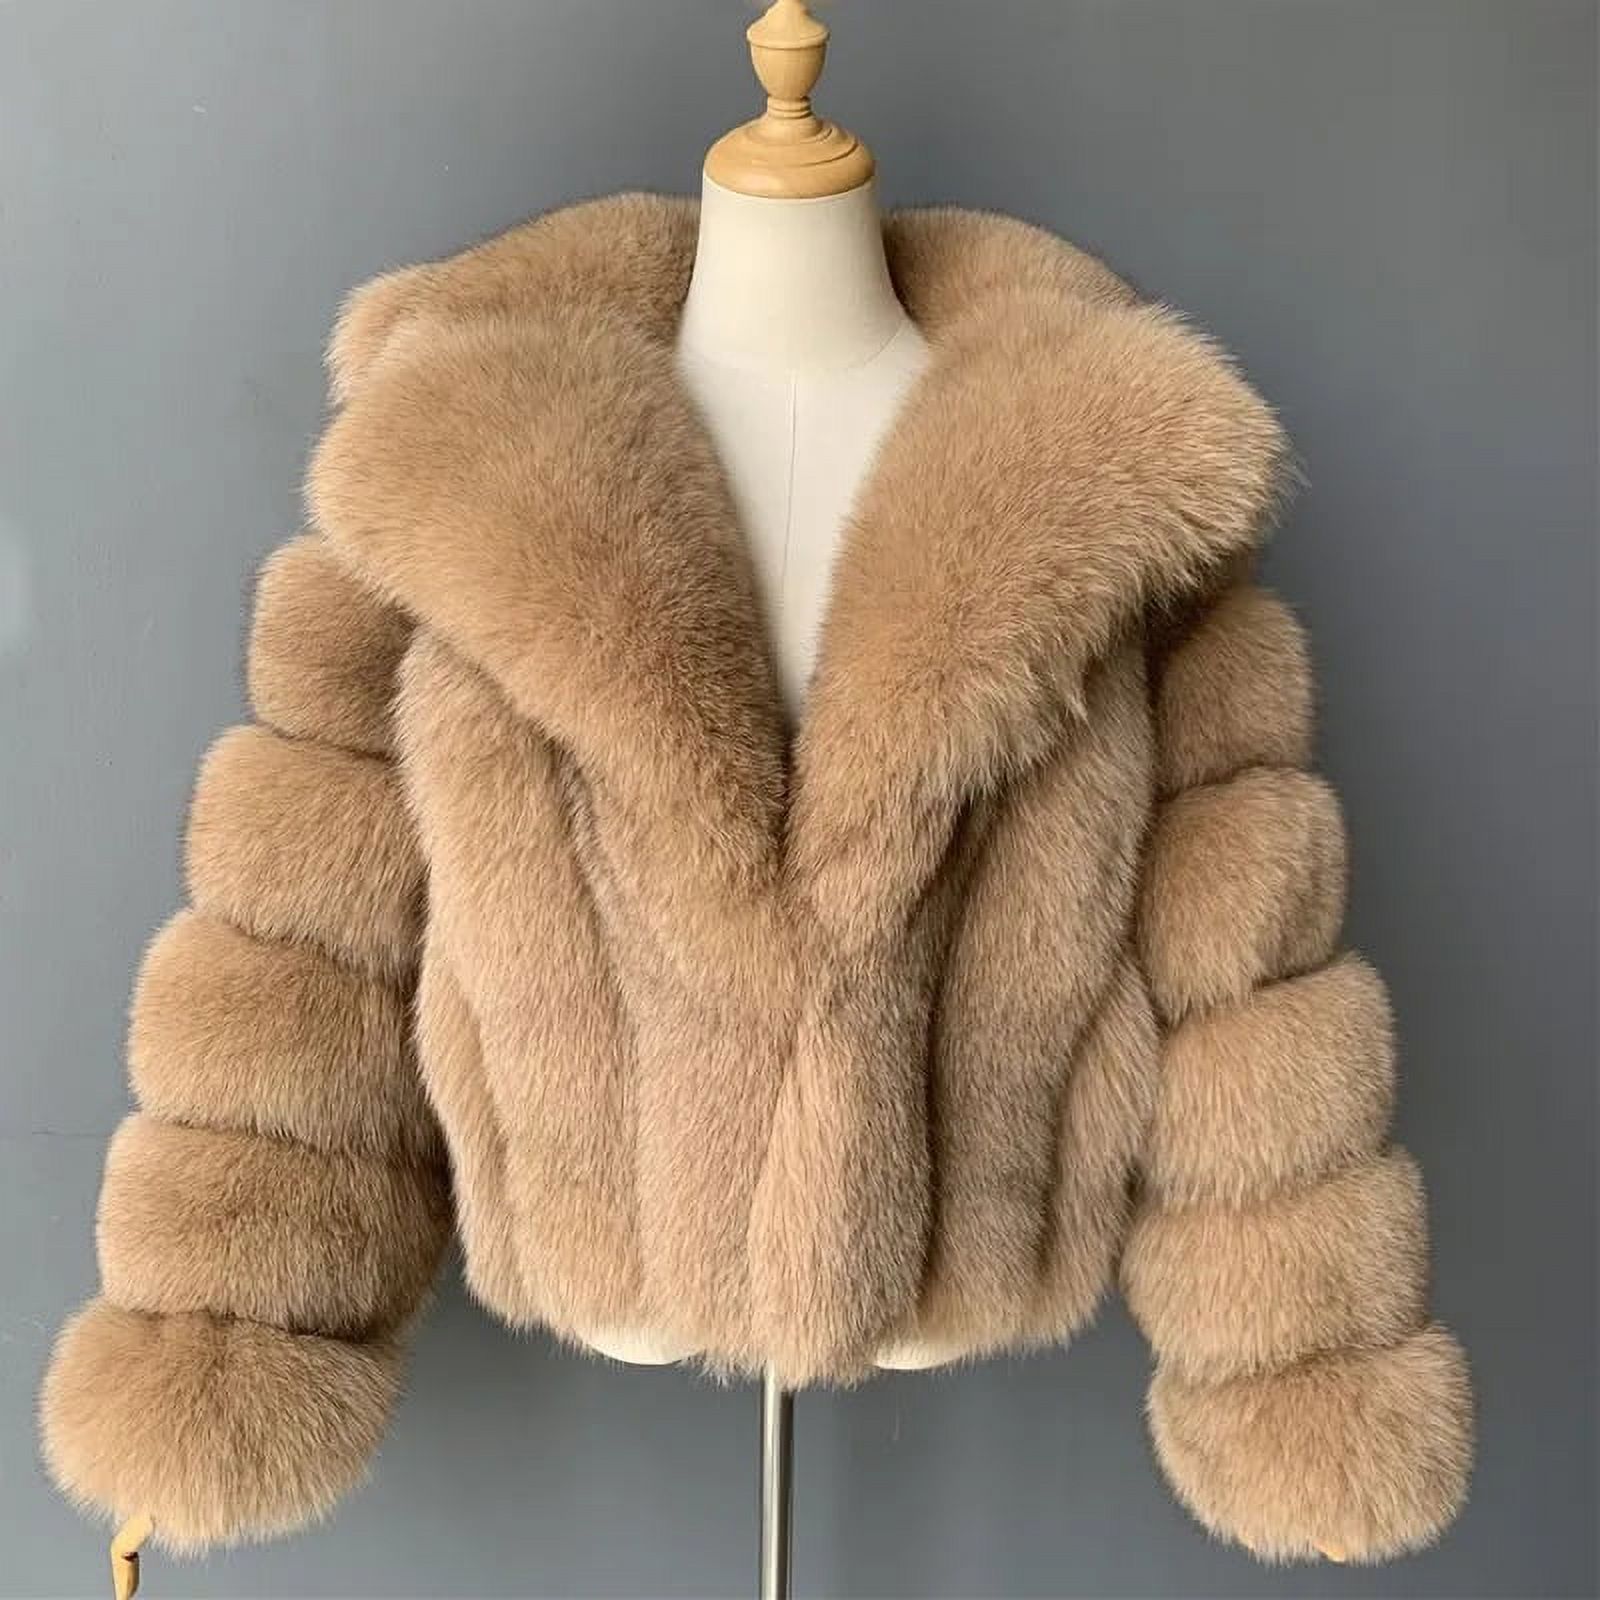 PIKADINGNIS Winter Thicken Mink Coats Women Fashion Turndown Collar Short Faux Fur Coat Elegant Warm Plush Outerwear Womens Jacket - image 3 of 6